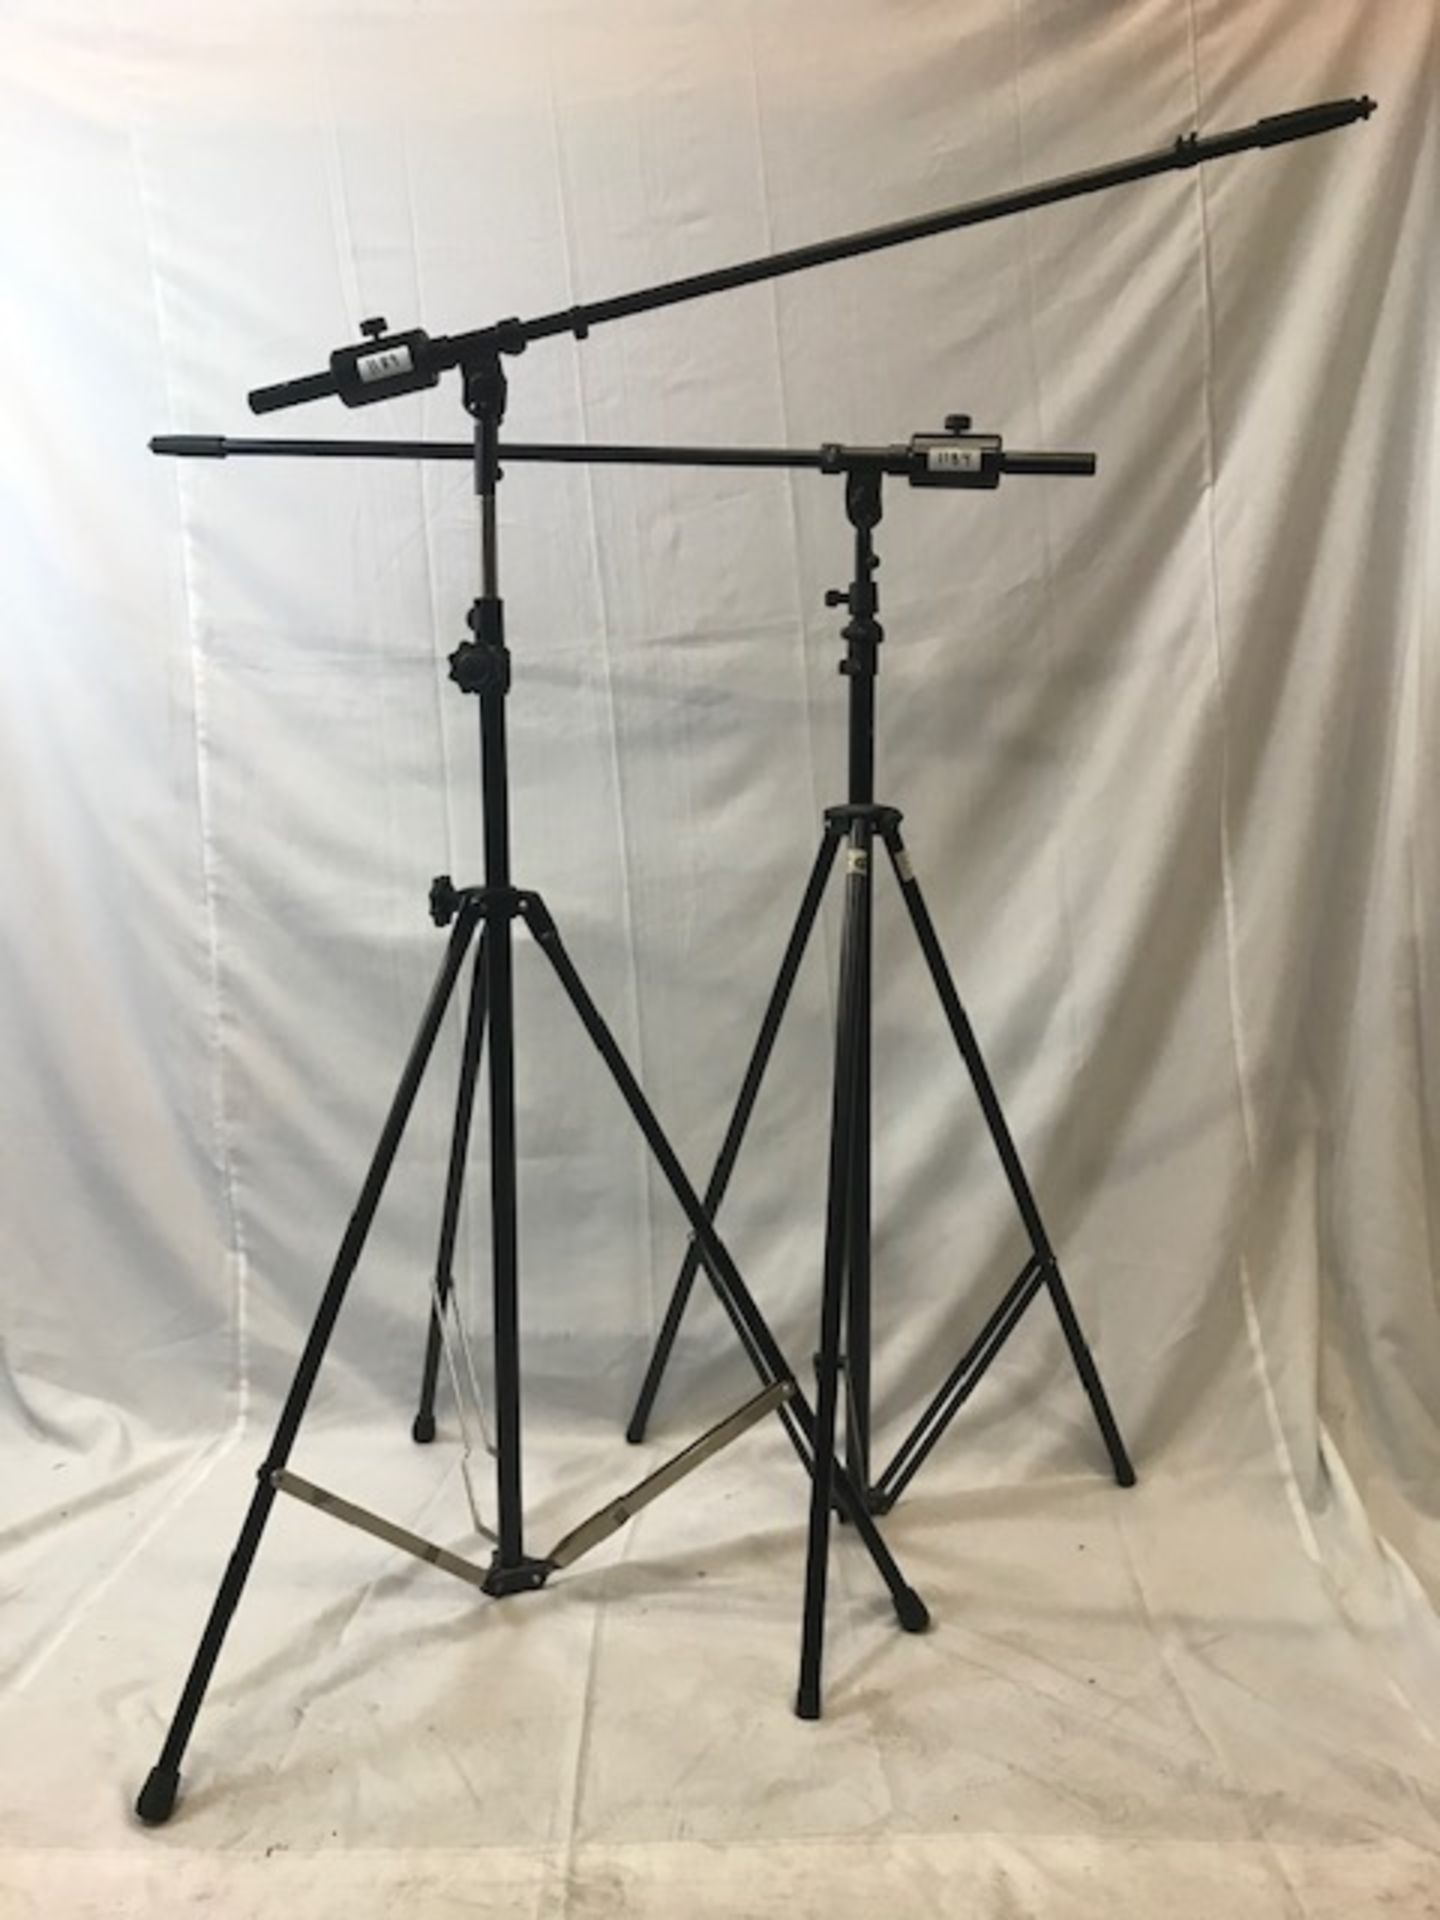 1 x Pair of K&M heavy duty overhead mic stands - Ref: 1189 - CL581 - Location: Altrincham WA14